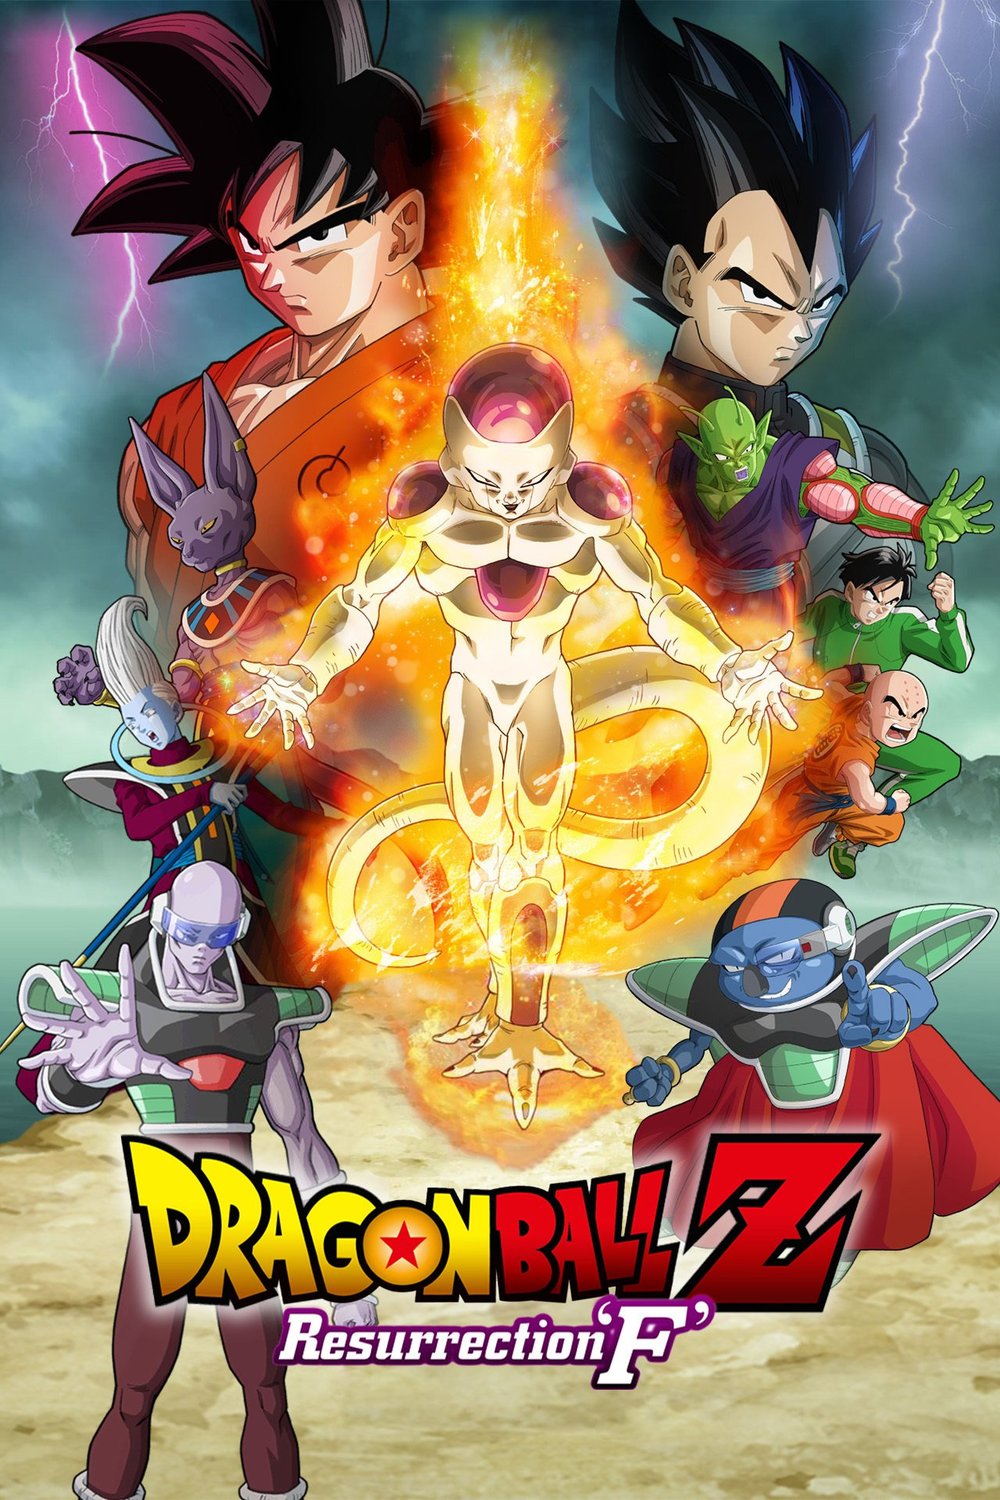 Dragon Ball Z: Resurrection "F" DVD Release Date | Redbox, Netflix, iTunes, Amazon